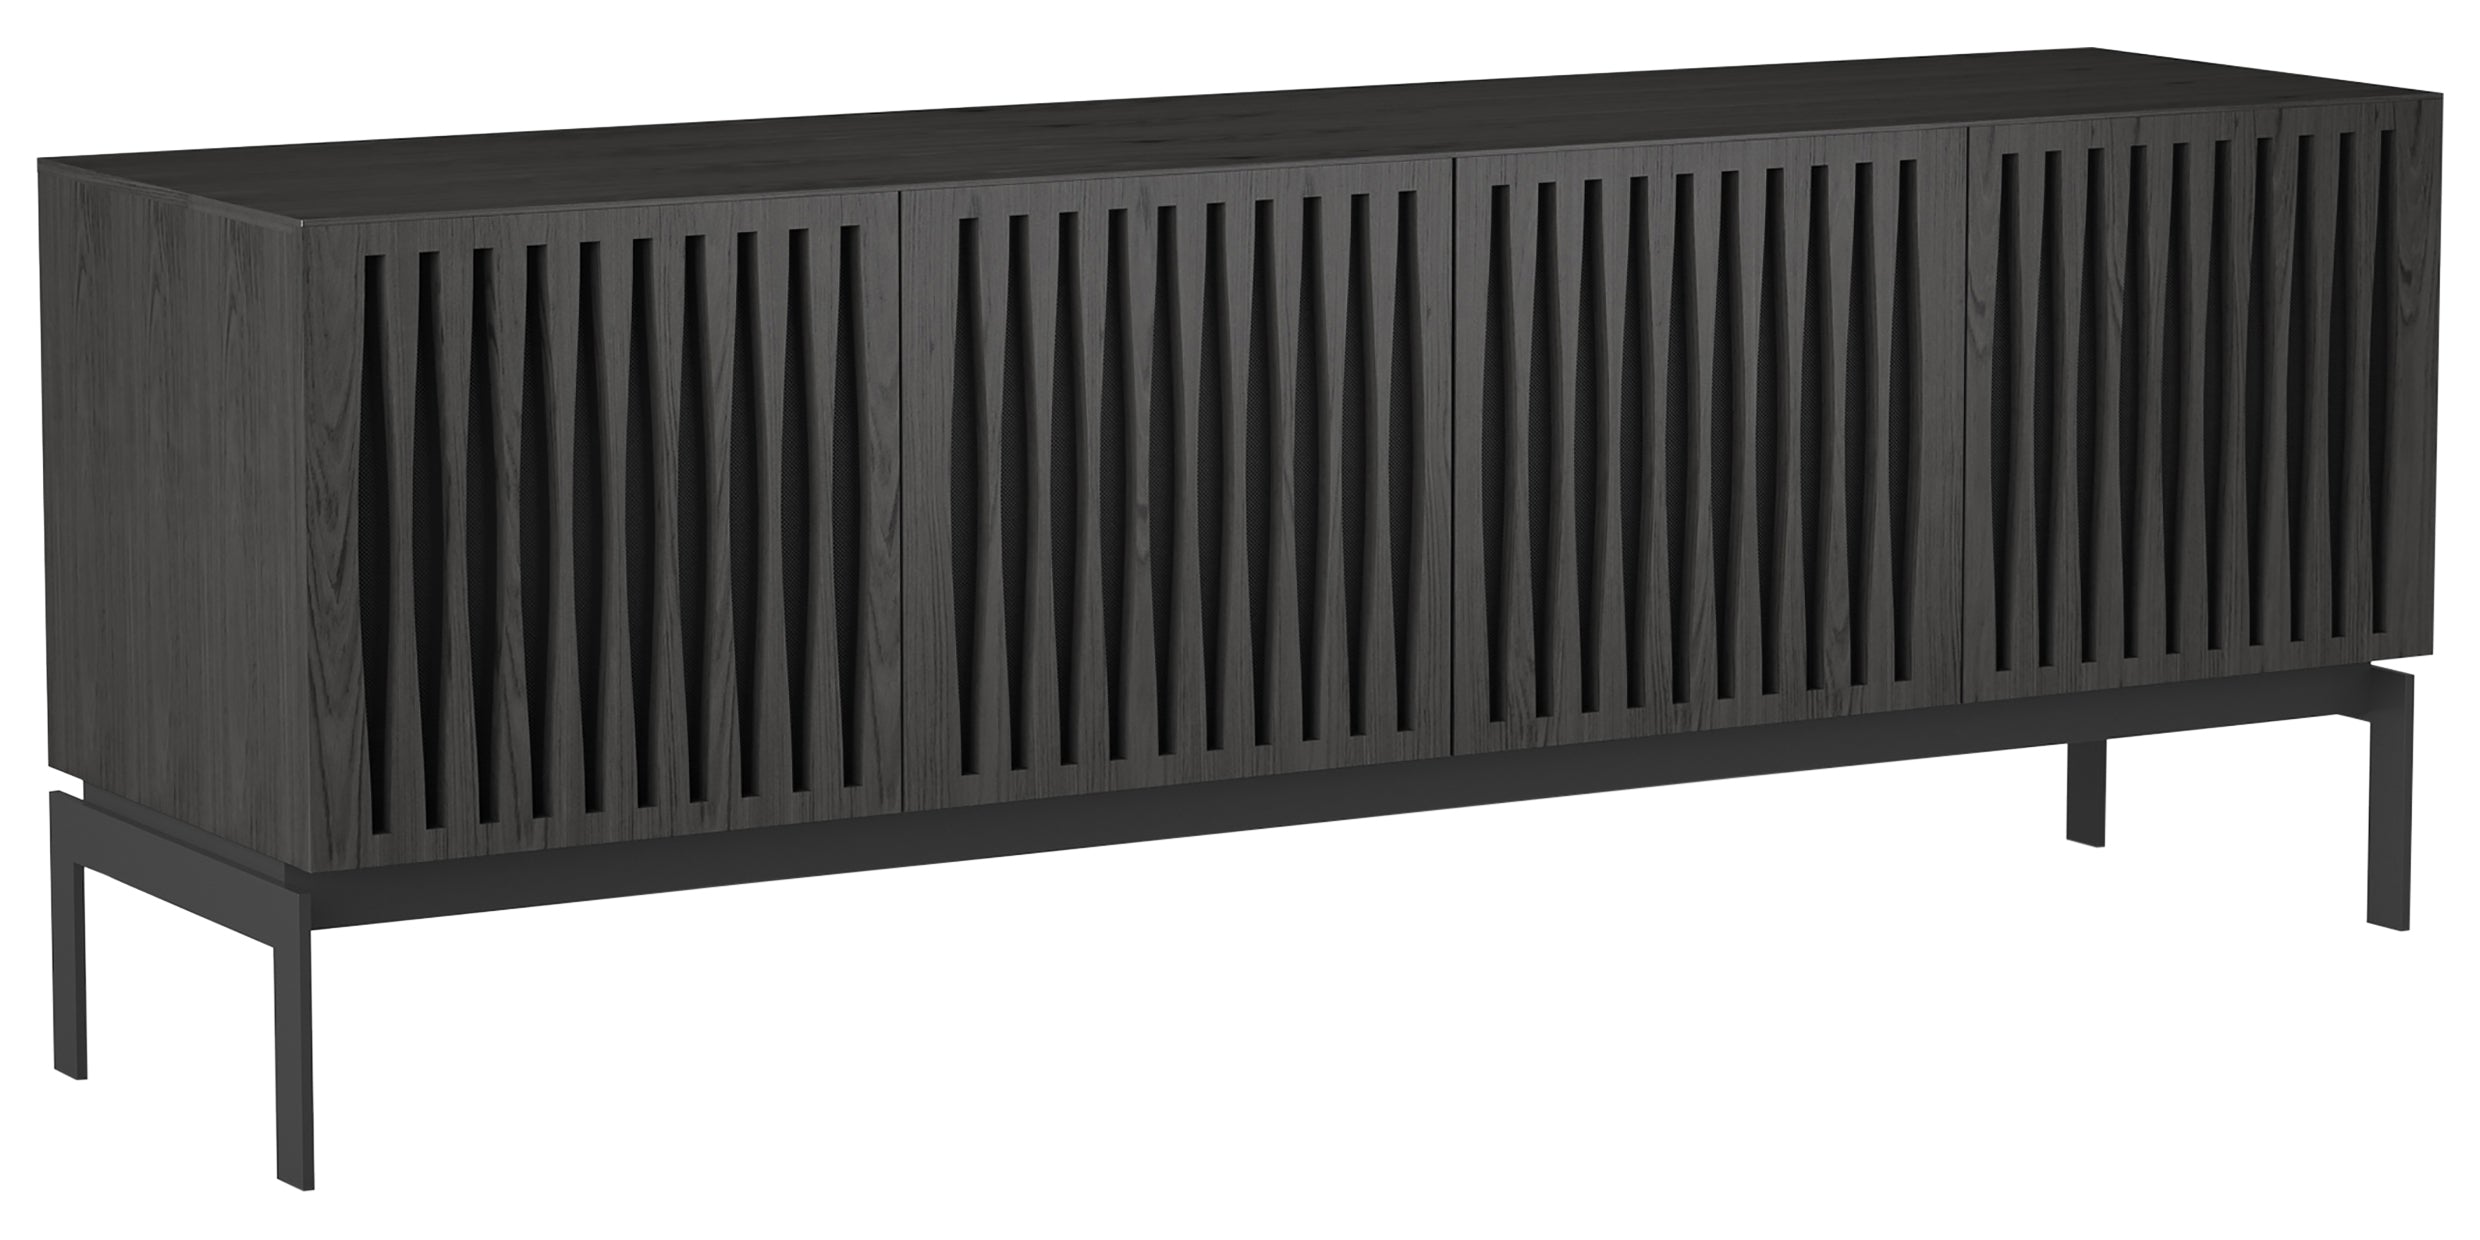 Charcoal Ash Veneer & Black Perforated Steel with Black Steel (Tempo) | BDI Elements 4 Door Storage Cabinet | Valley Ridge Furniture